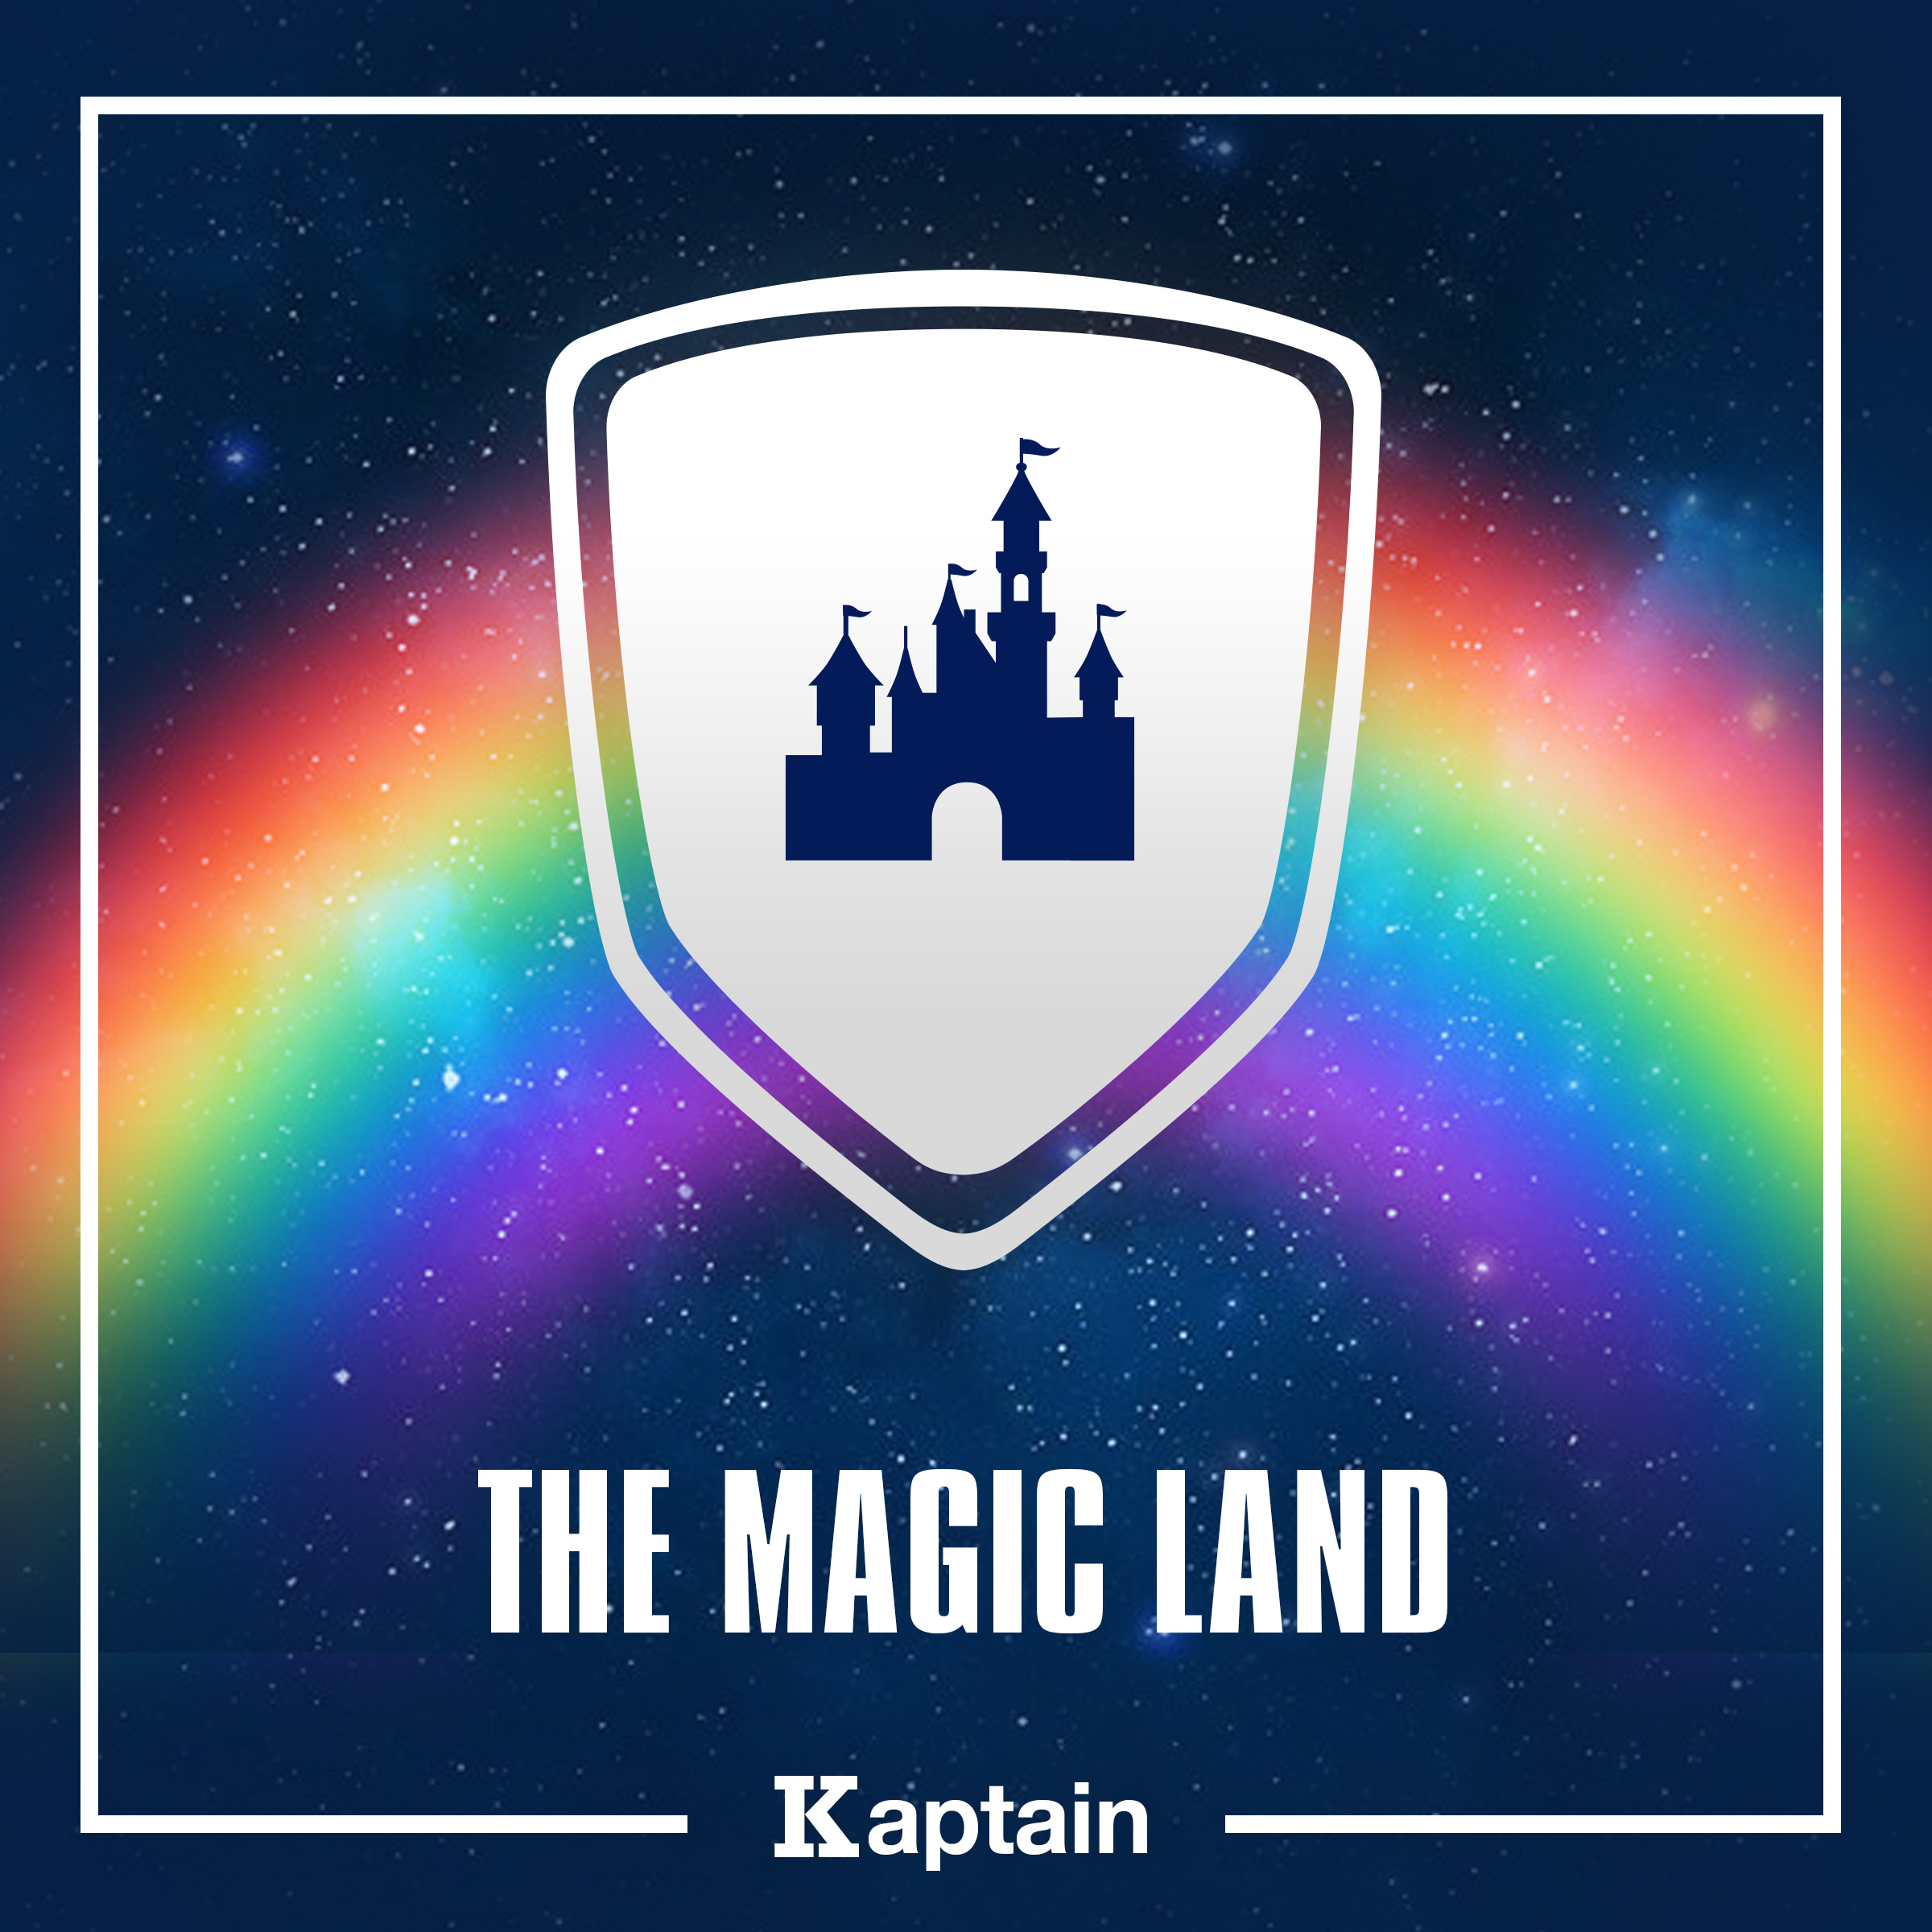 The Magic Land